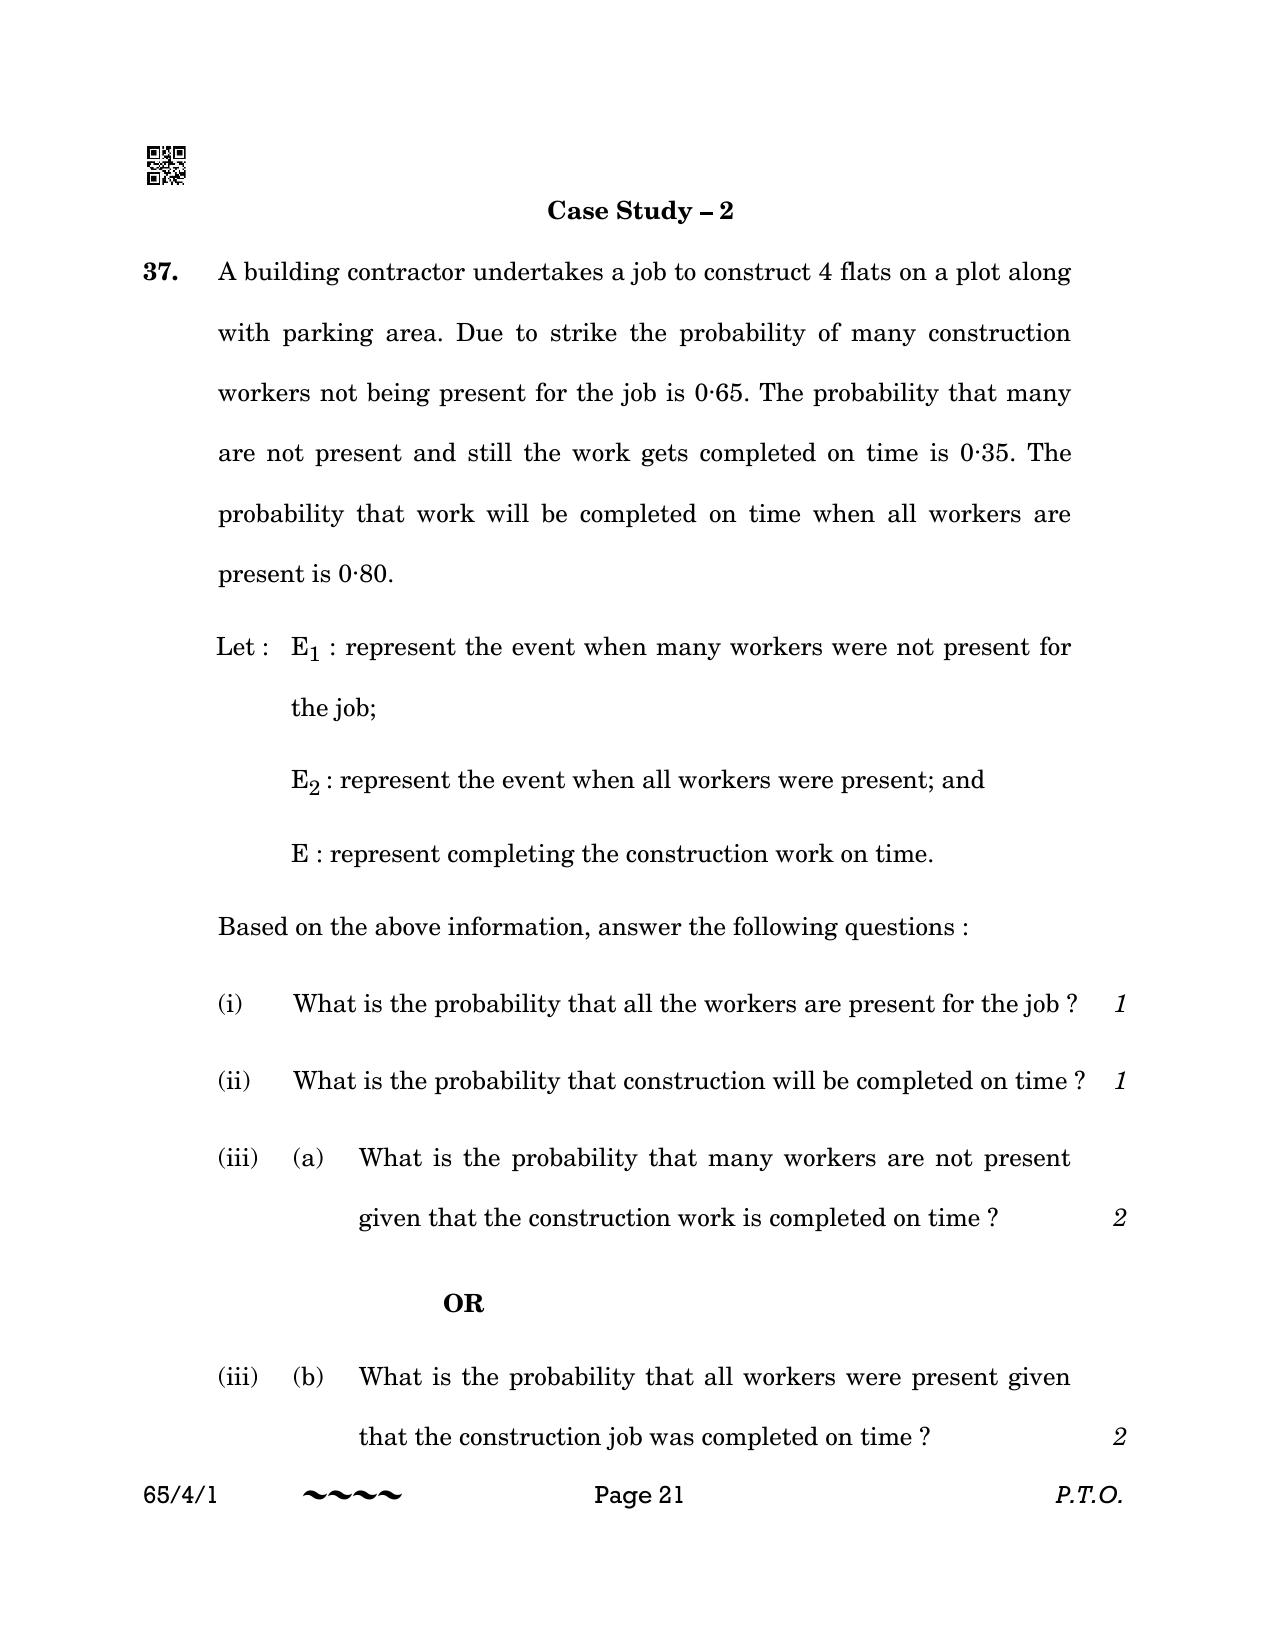 CBSE Class 12 65-4-1 MATHEMATICS 2023 Question Paper - Page 21